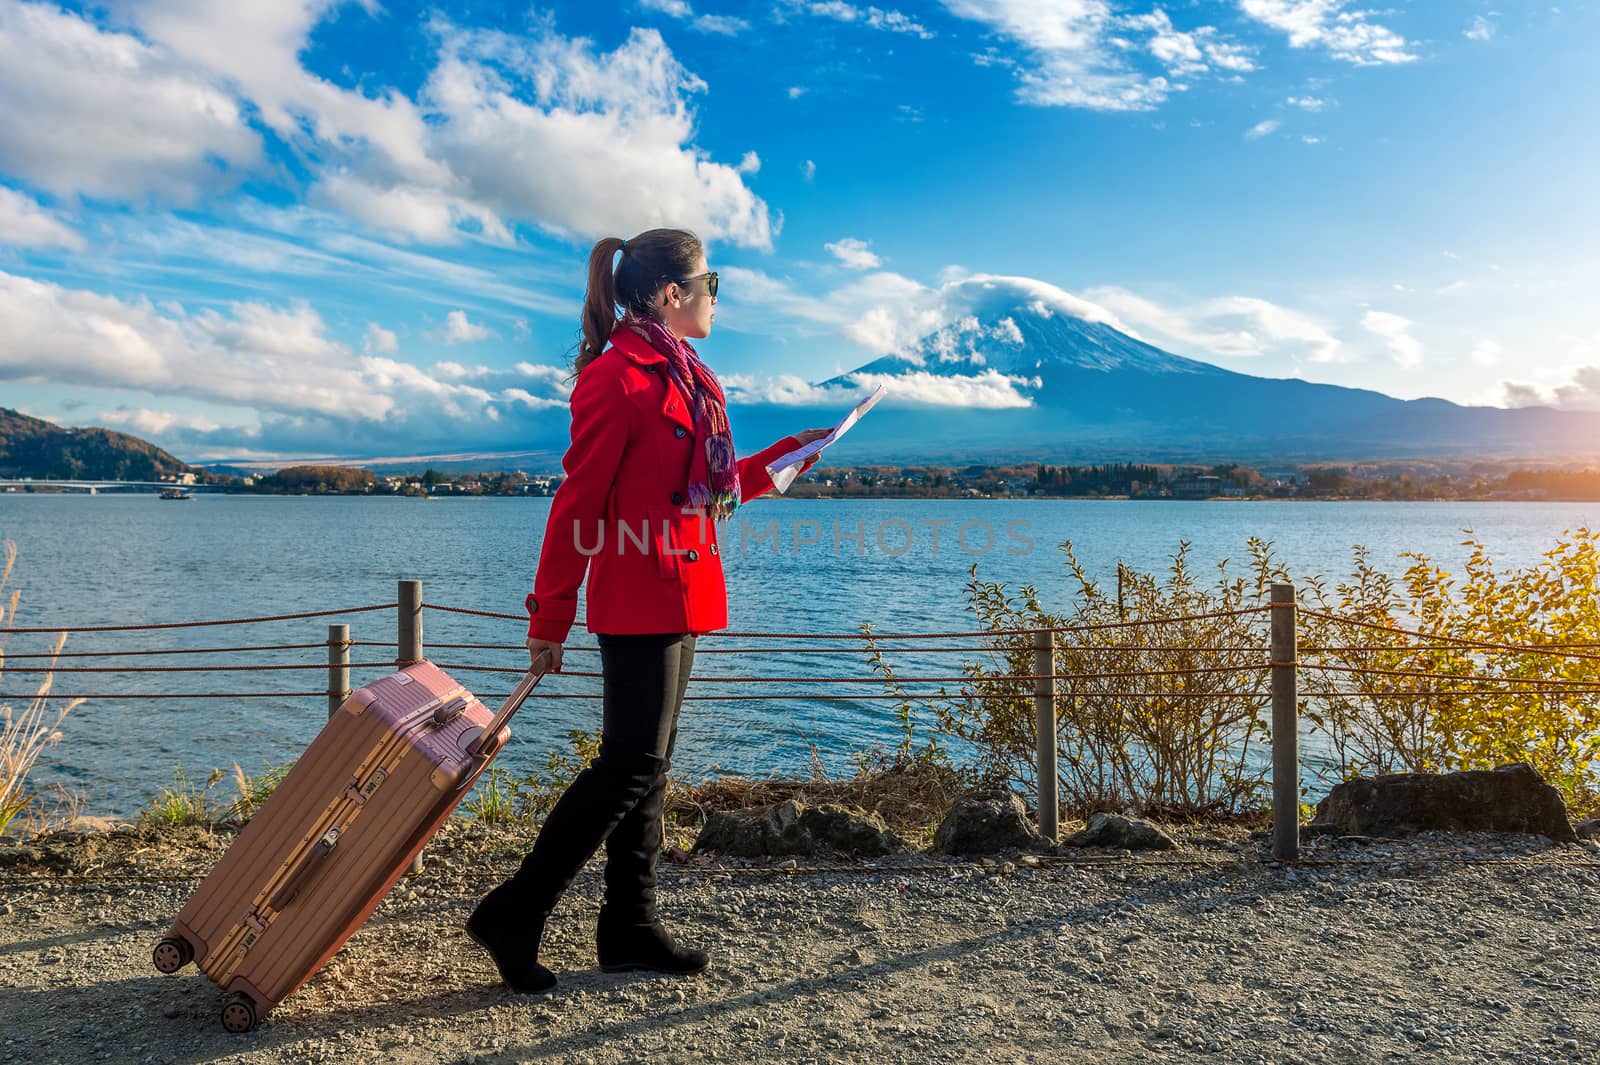 Tourist with baggage and map at Fuji mountain, Kawaguchiko in Japan.